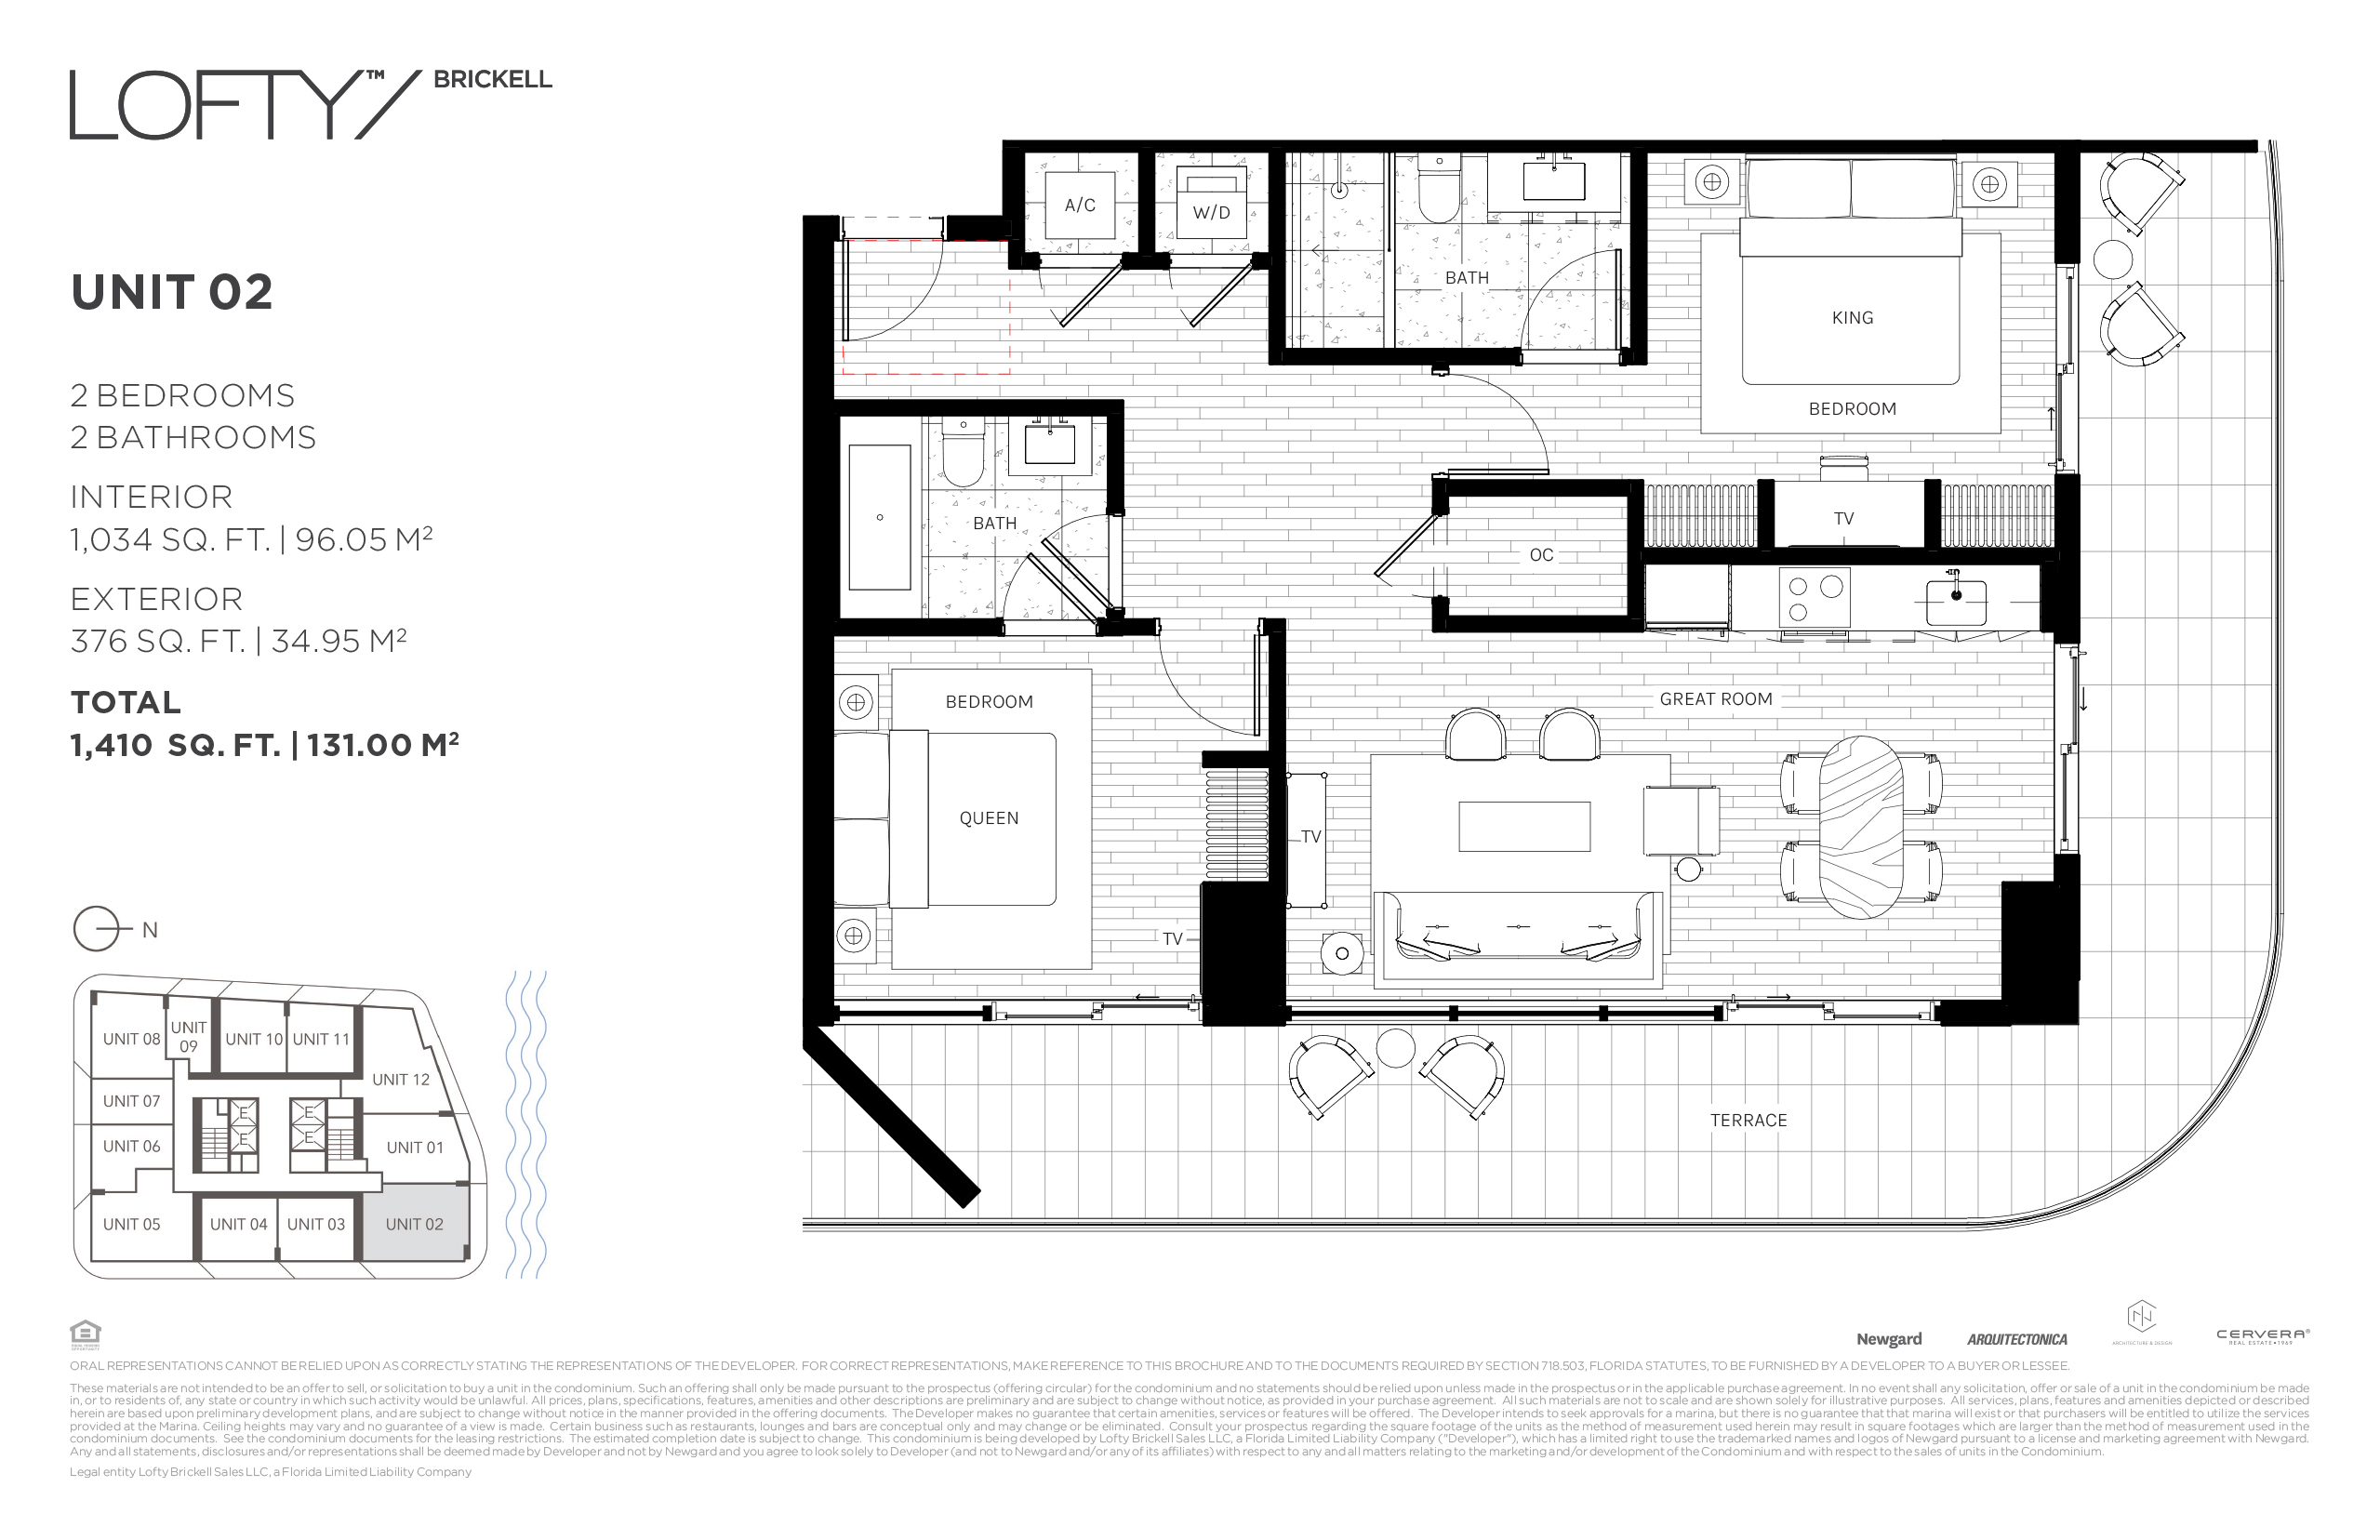 Floor Plan for Lofty Brickell Floorplans, Unit 02